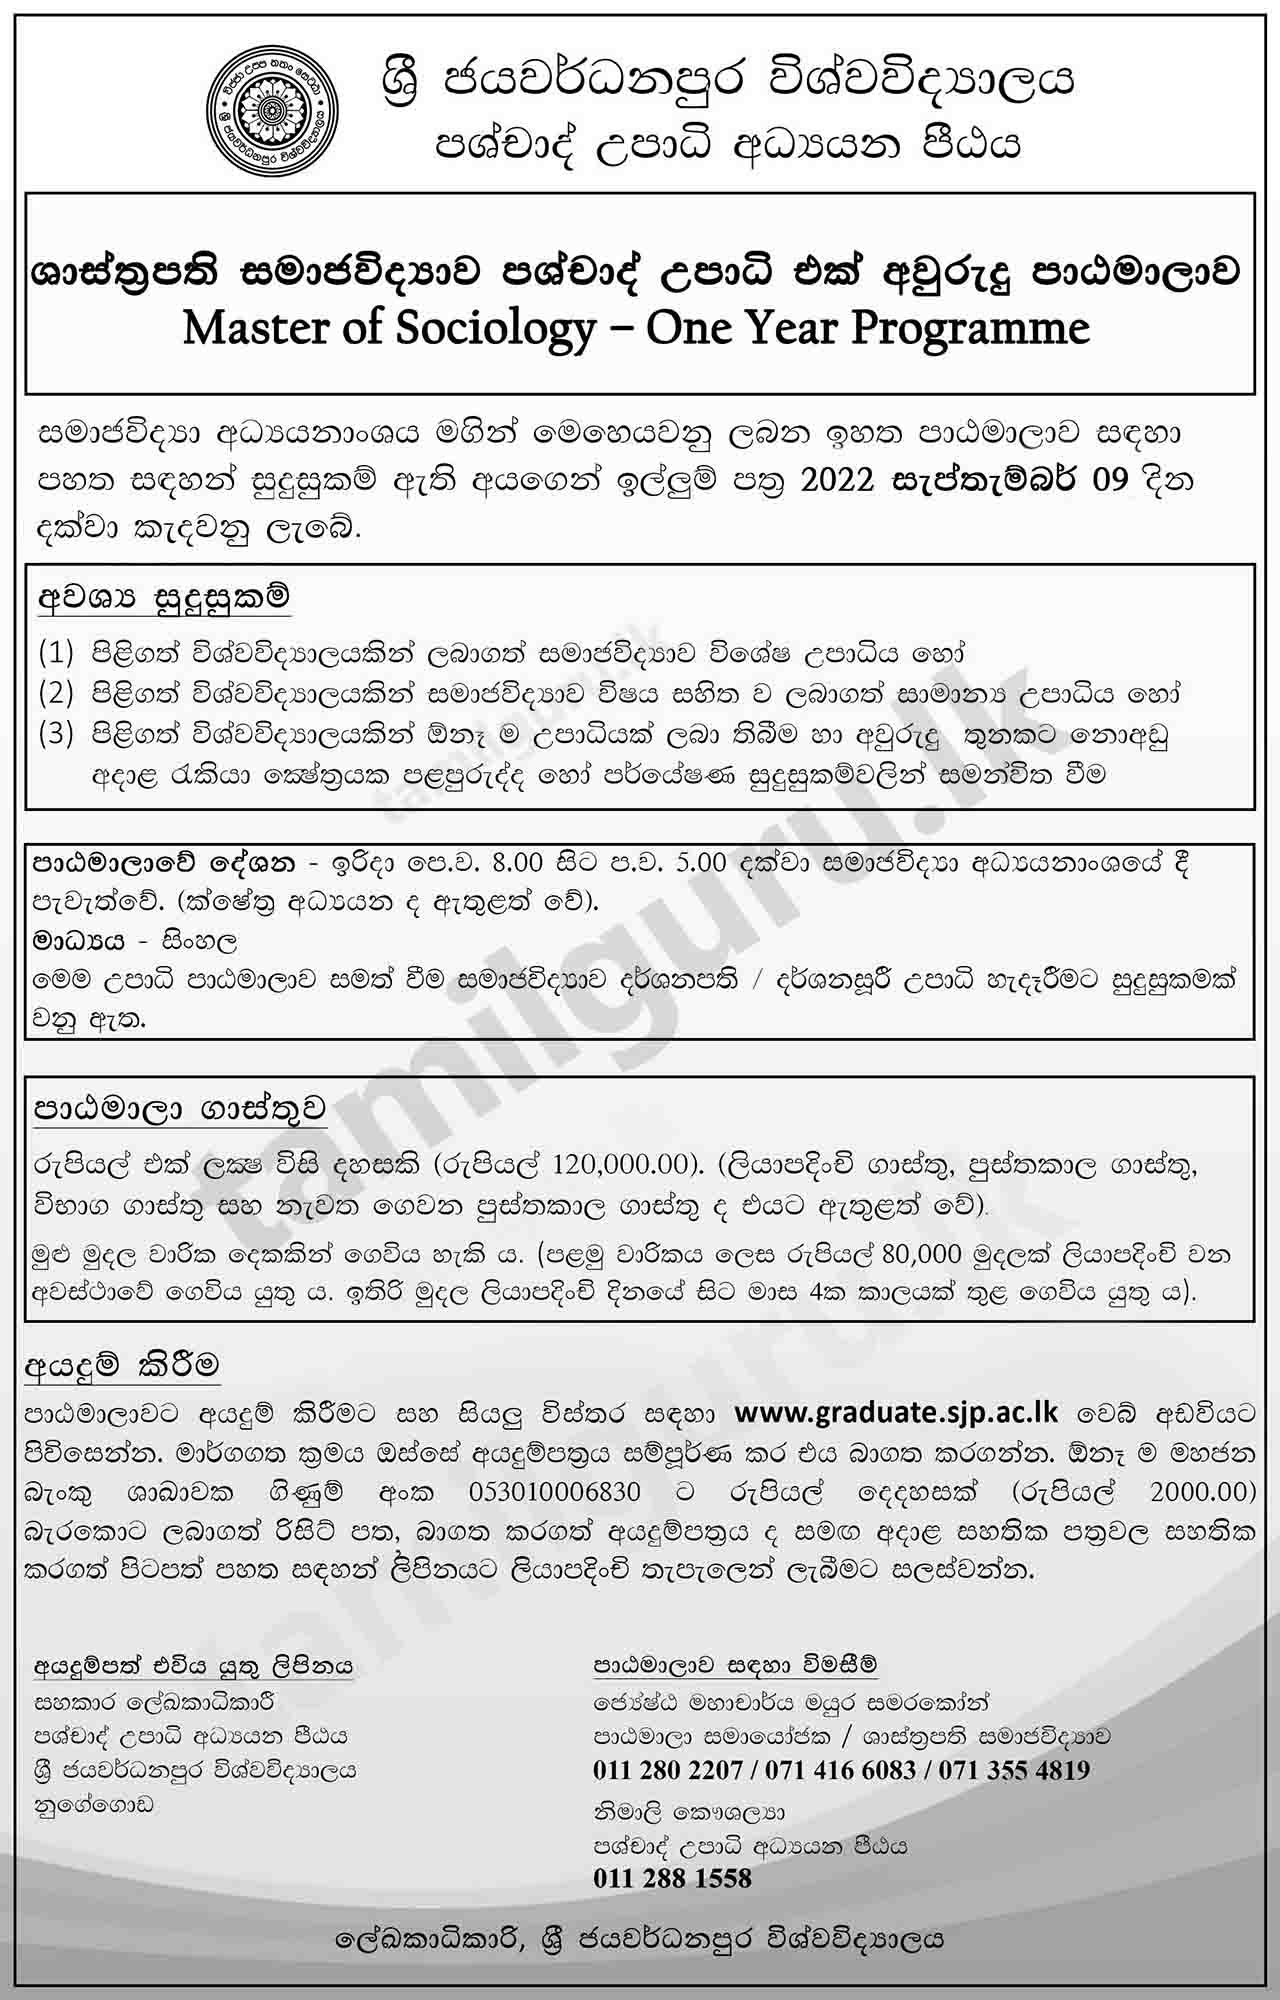 Application Calling Notice for Master of Sociology (One Year Programme) 2022 from University of Sri Jayewardenepura